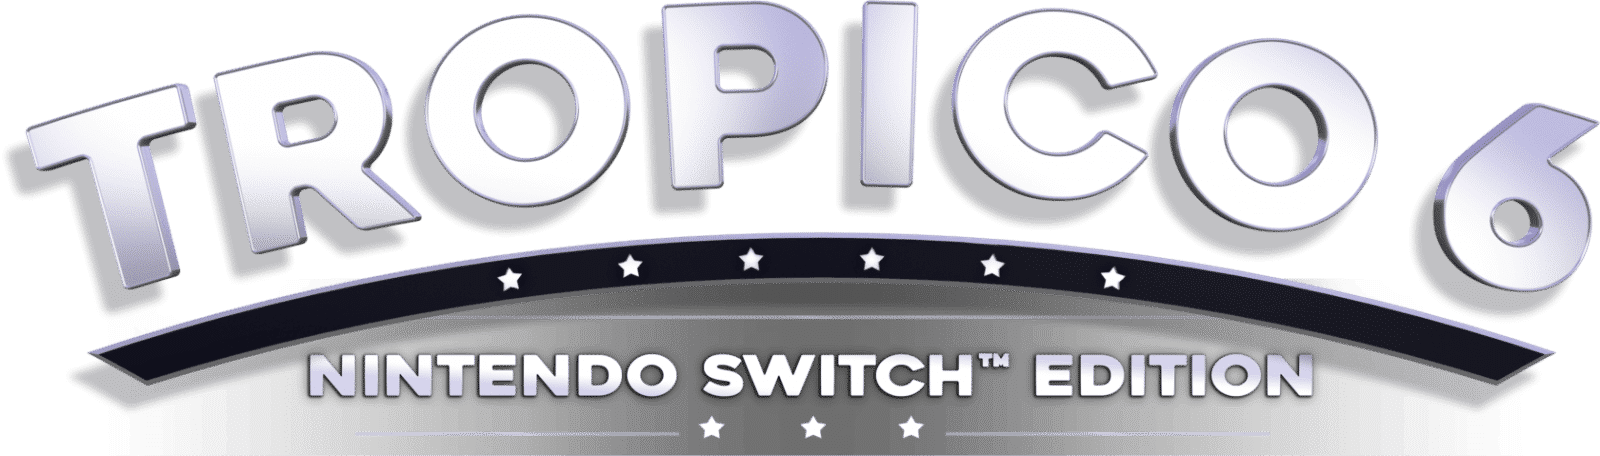 Tropico 6 - Nintendo Switch Edition Logo